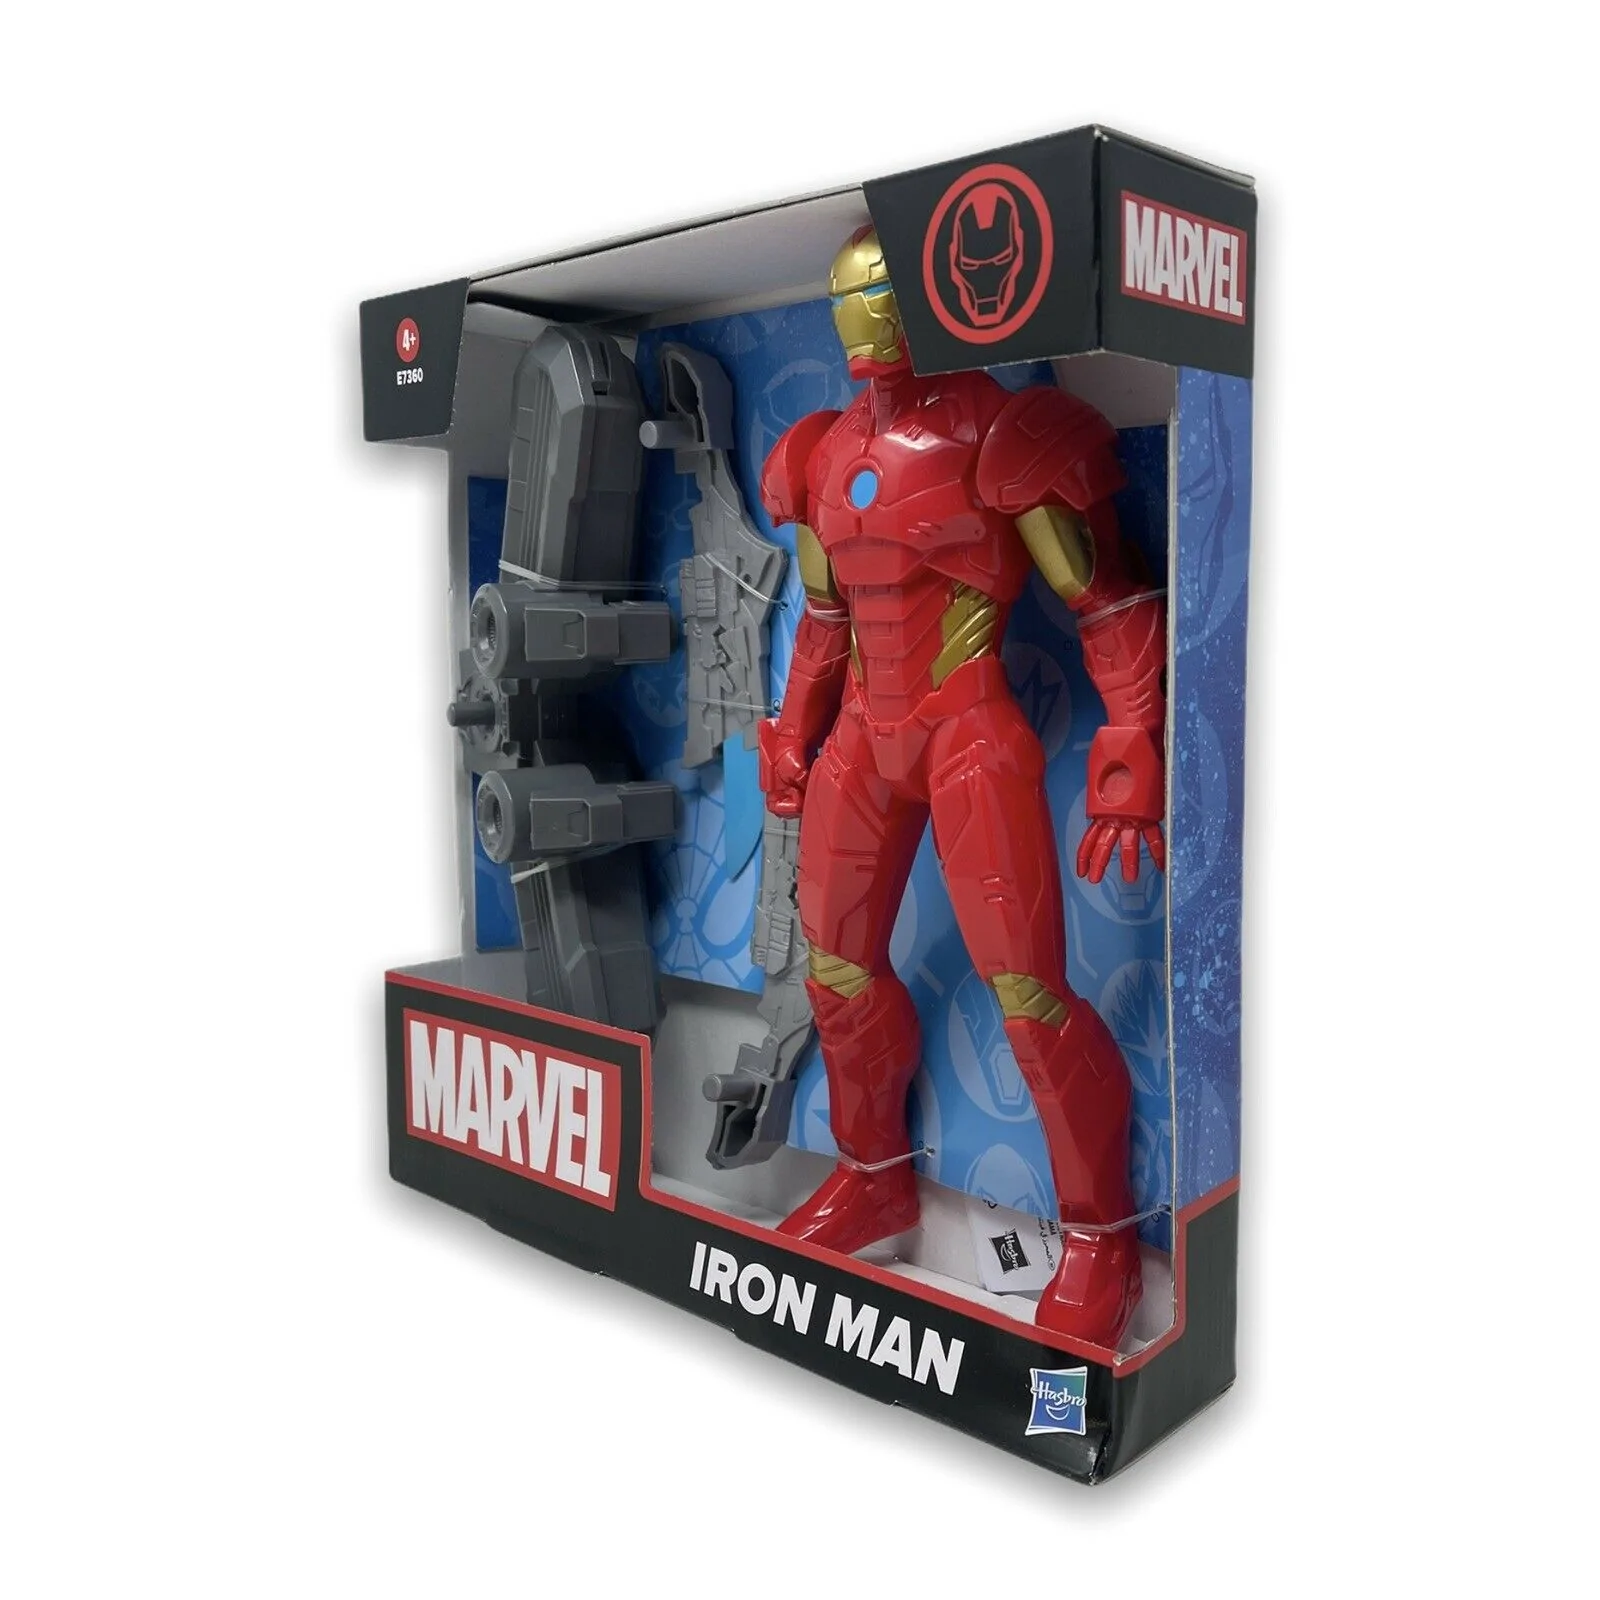 Marvel Iron Man Action Figure 9 inch